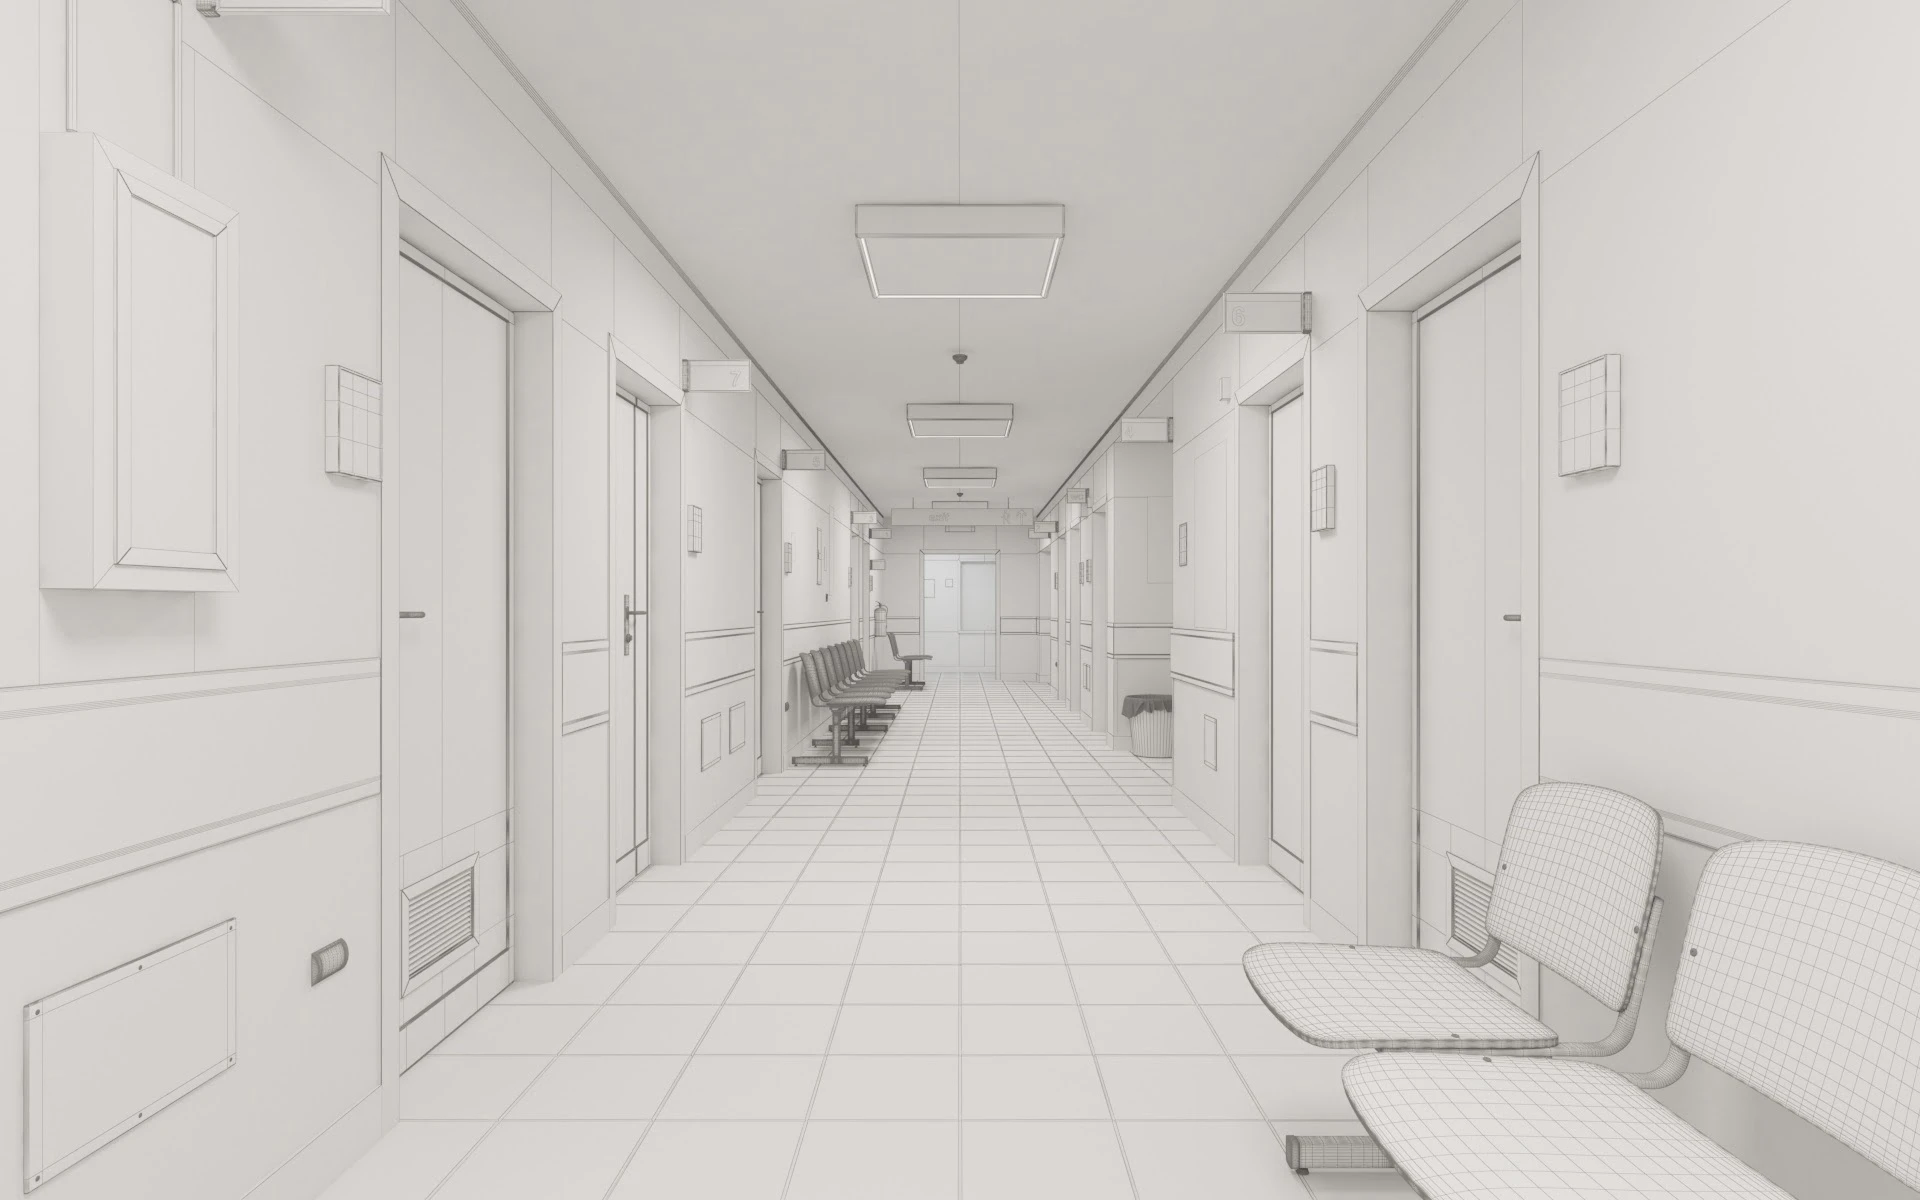 019 Hospital Hallway Corridor 3D Model_09